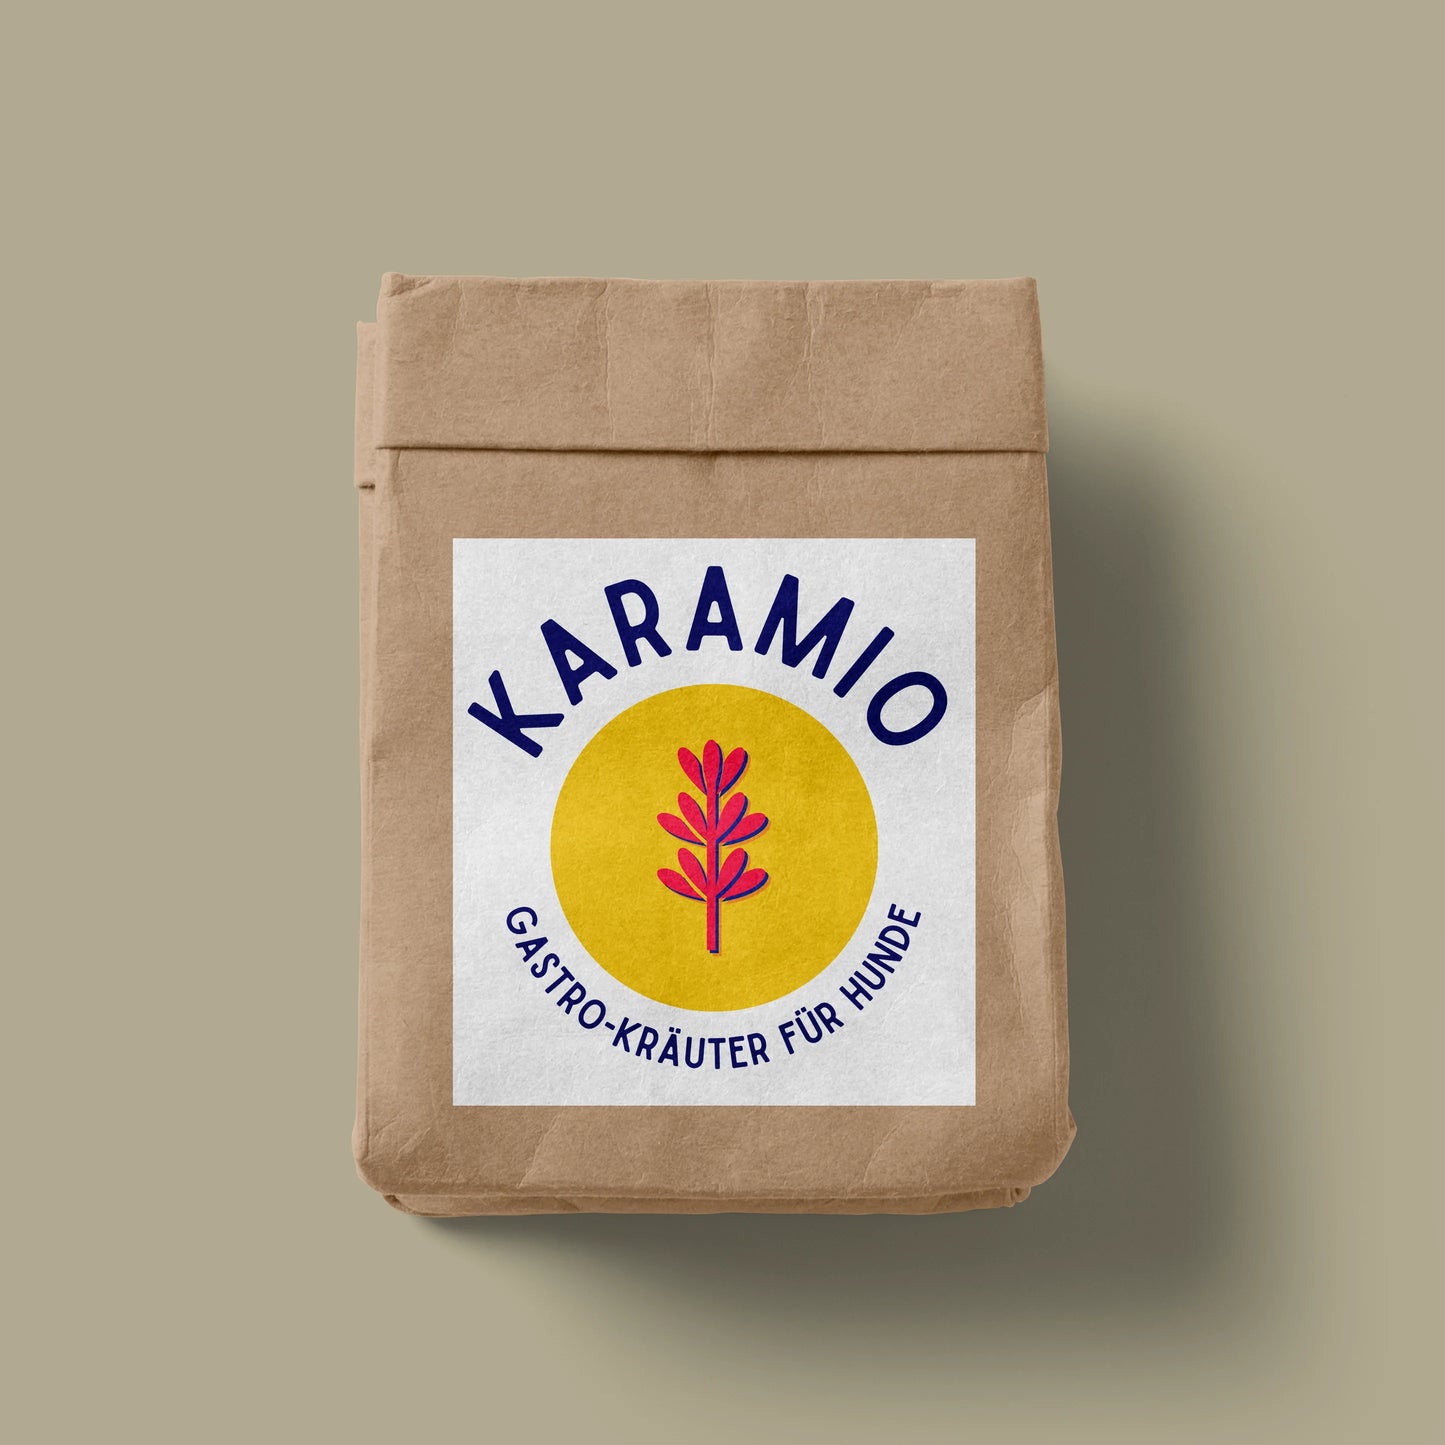 Karamio Gastro-Kräuter für Hunde